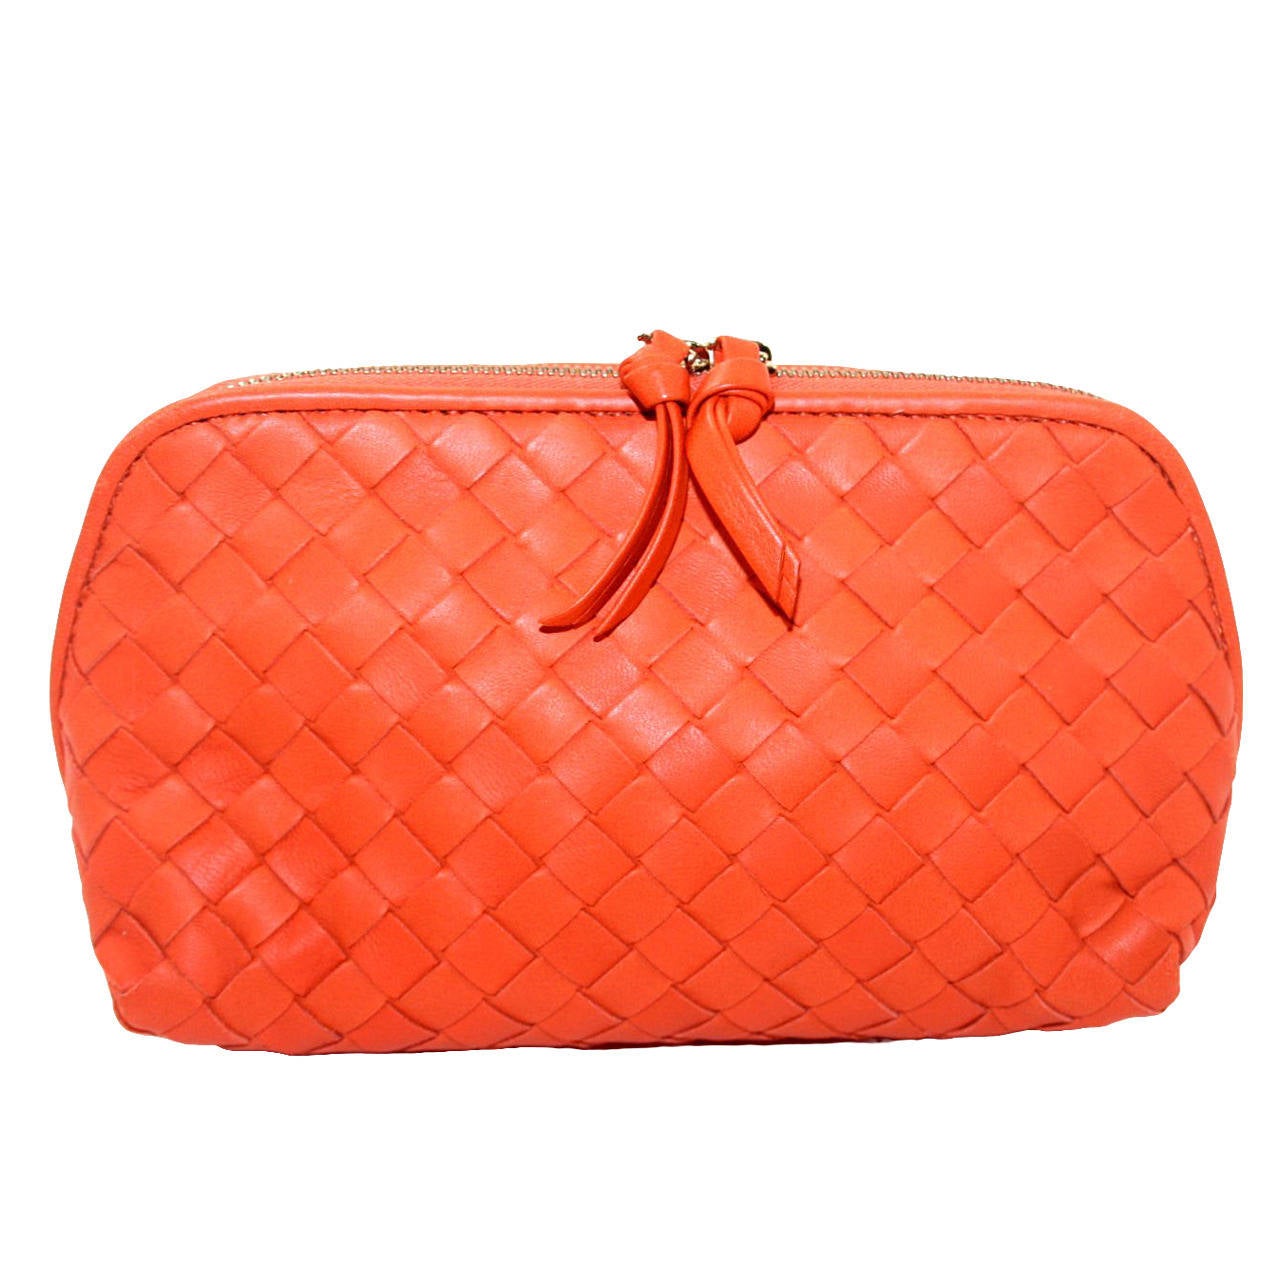 Bottega Veneta Orange Woven Leather Cosmetic Case